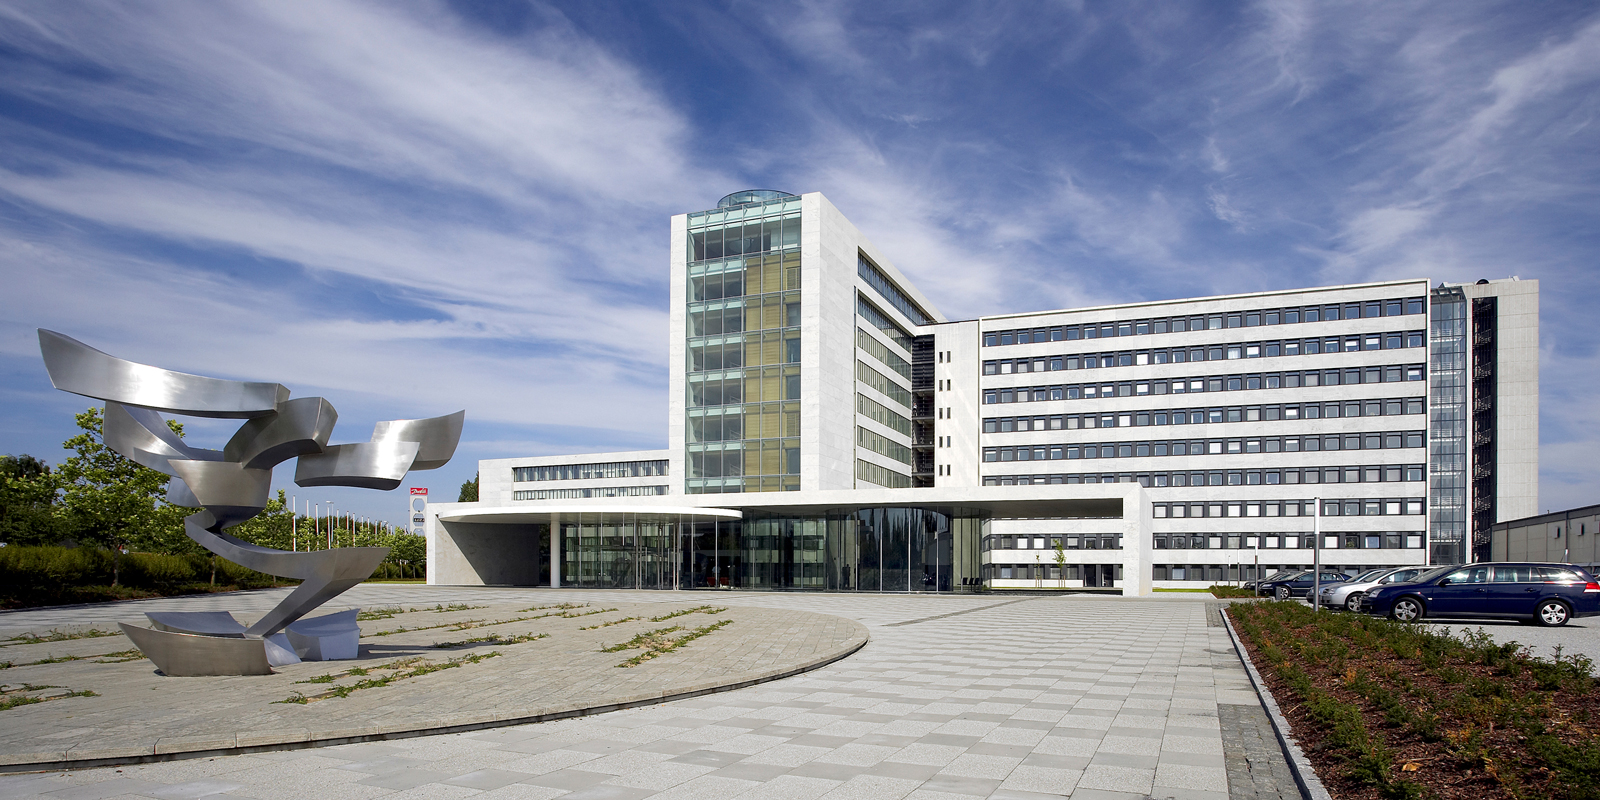 Danfoss Headquarter in Nordborg